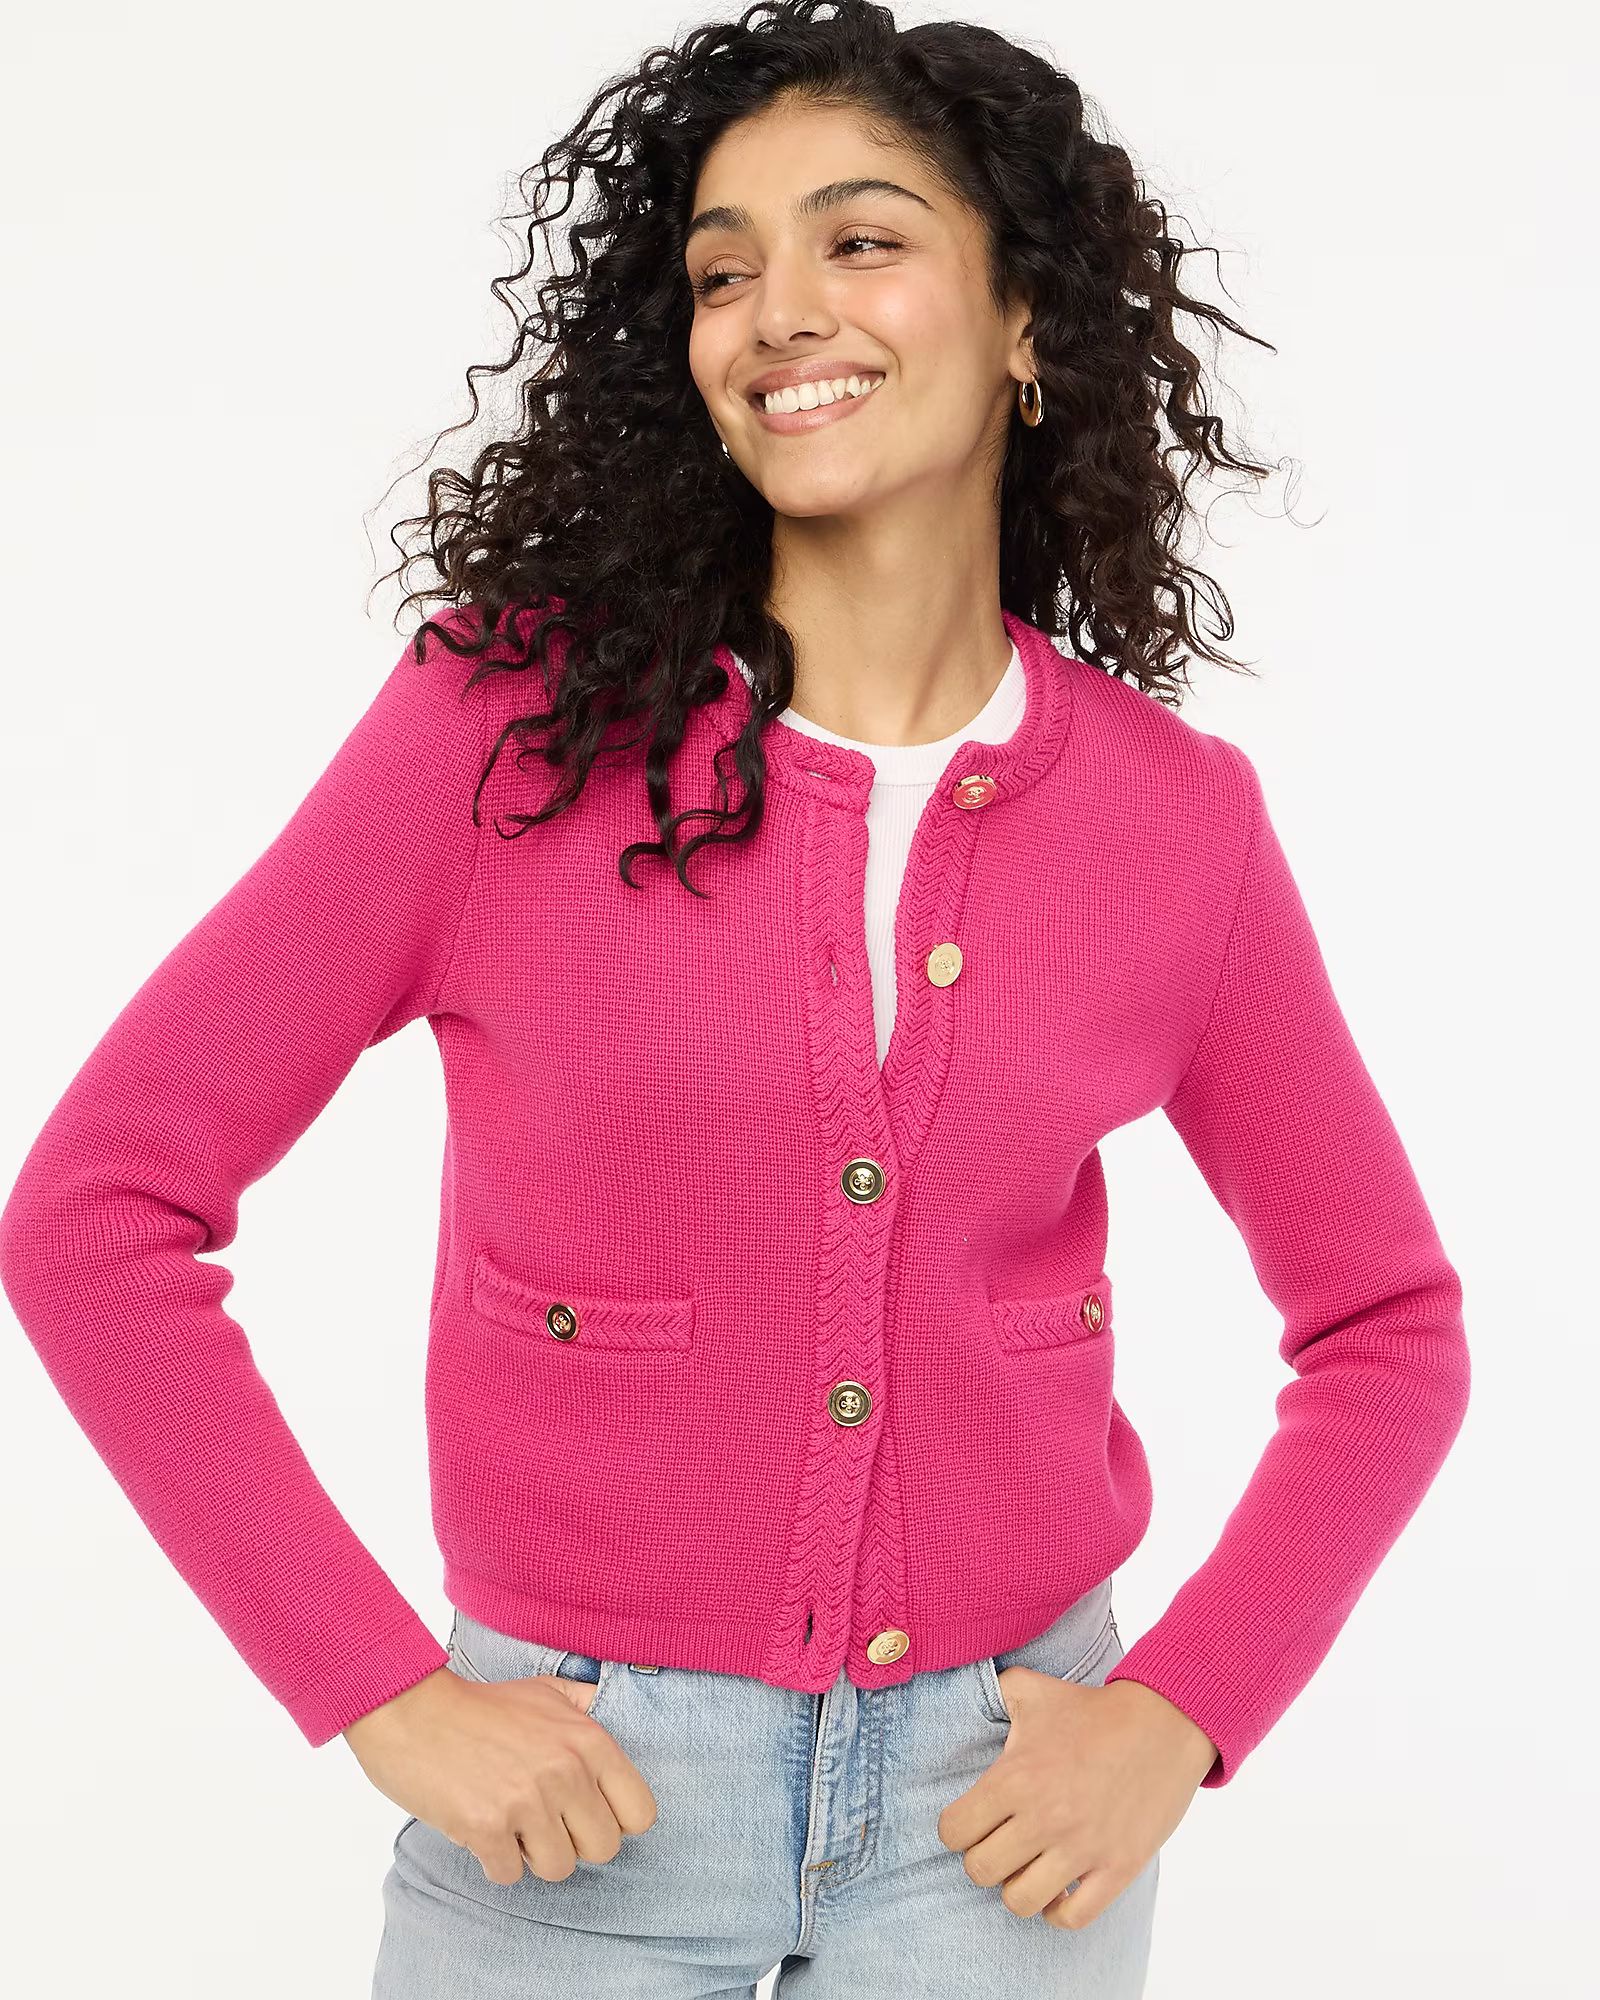 Cotton lady jacket cardigan sweater | J.Crew Factory